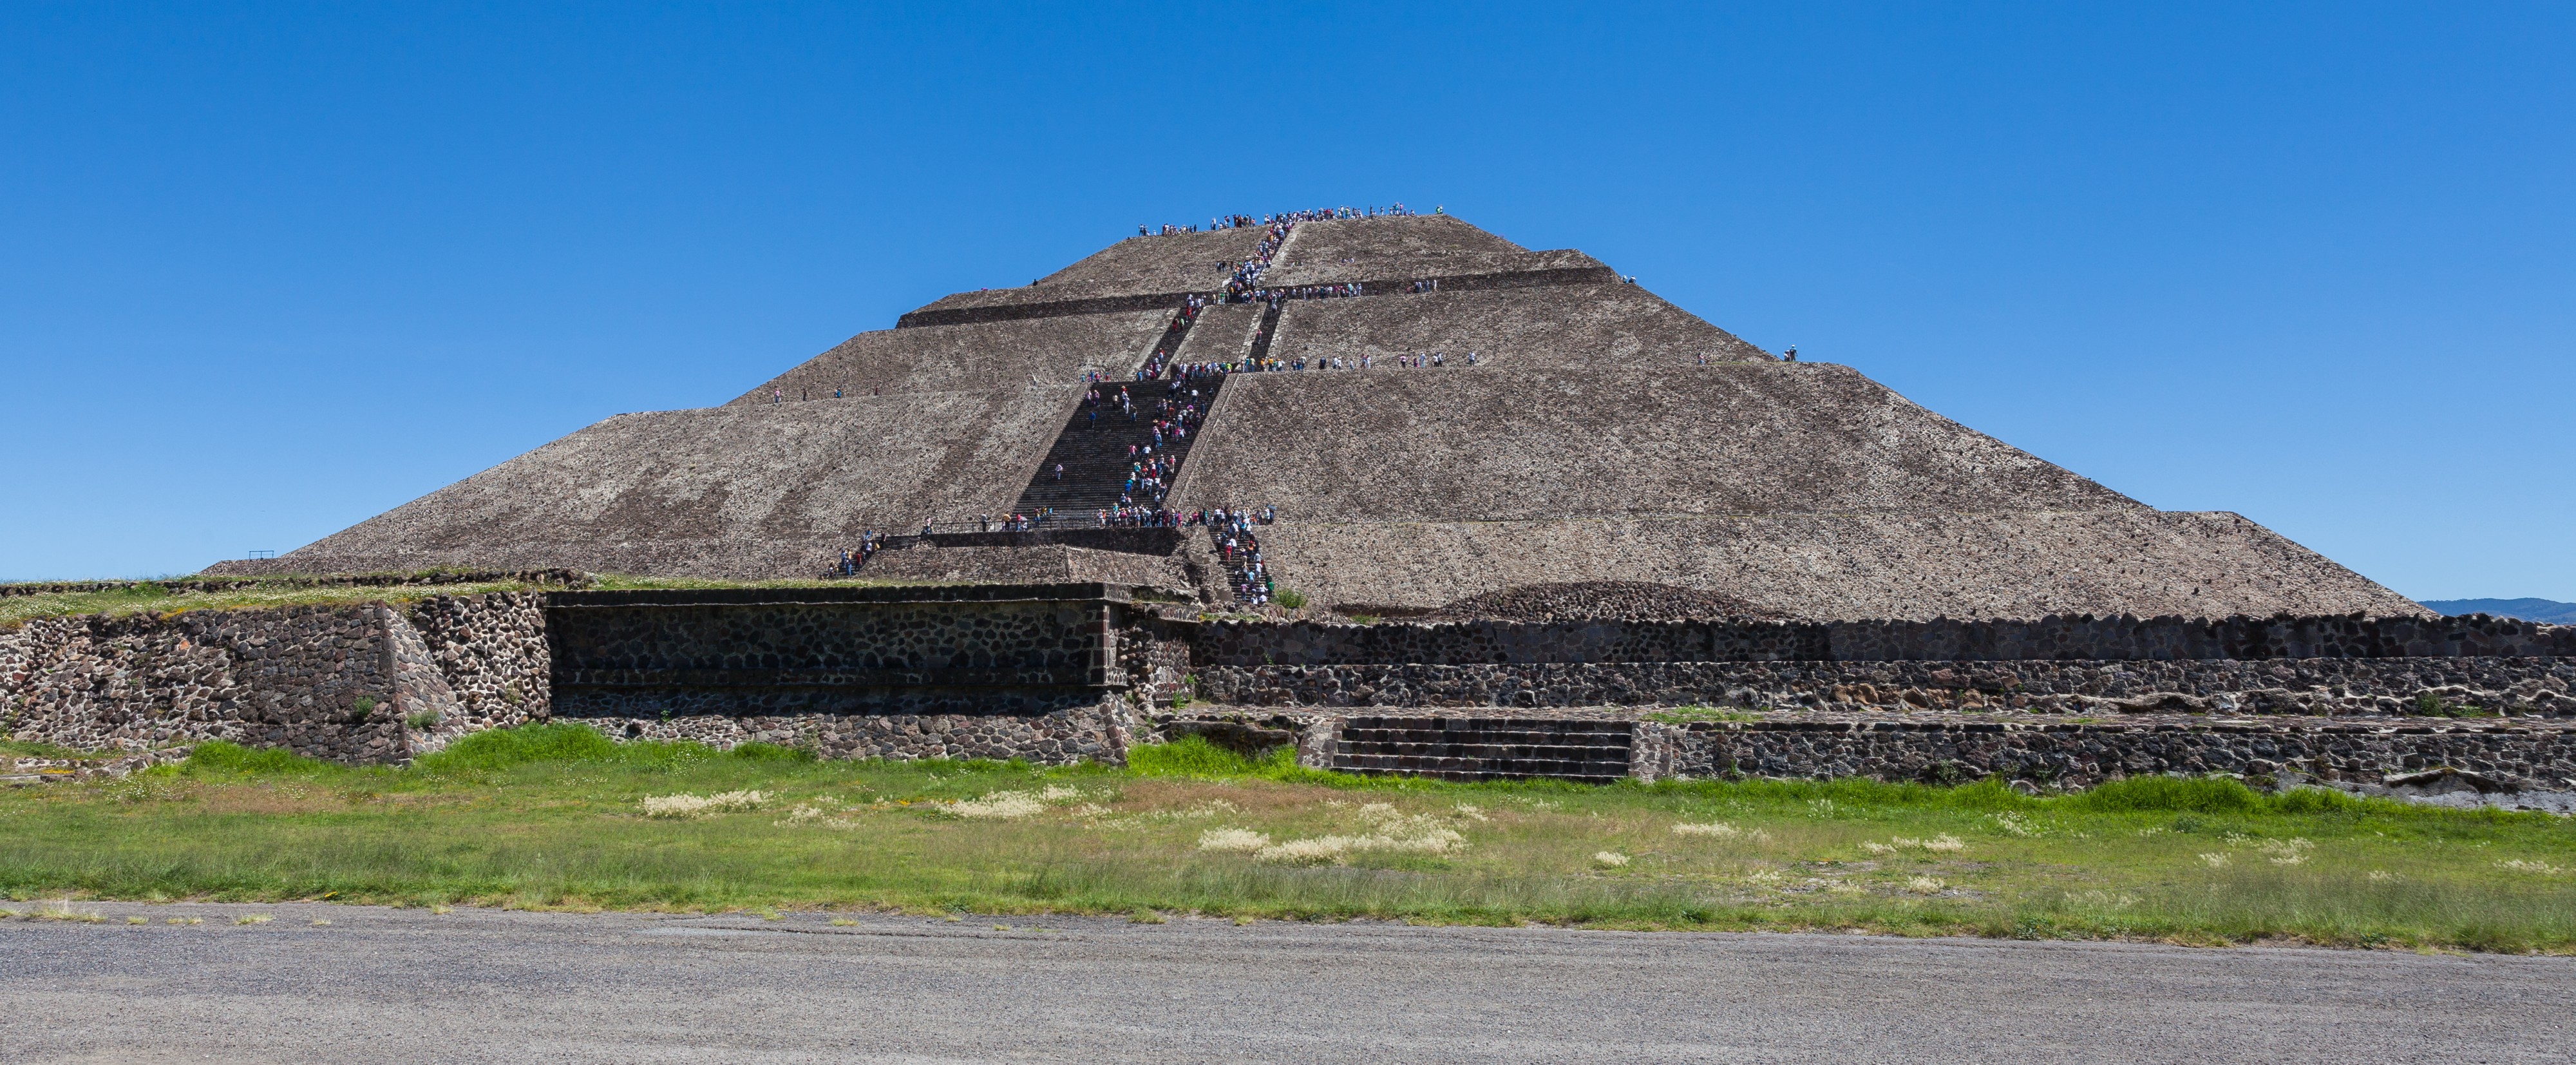 Teotihuacán, México, 2013-10-13, DD 93